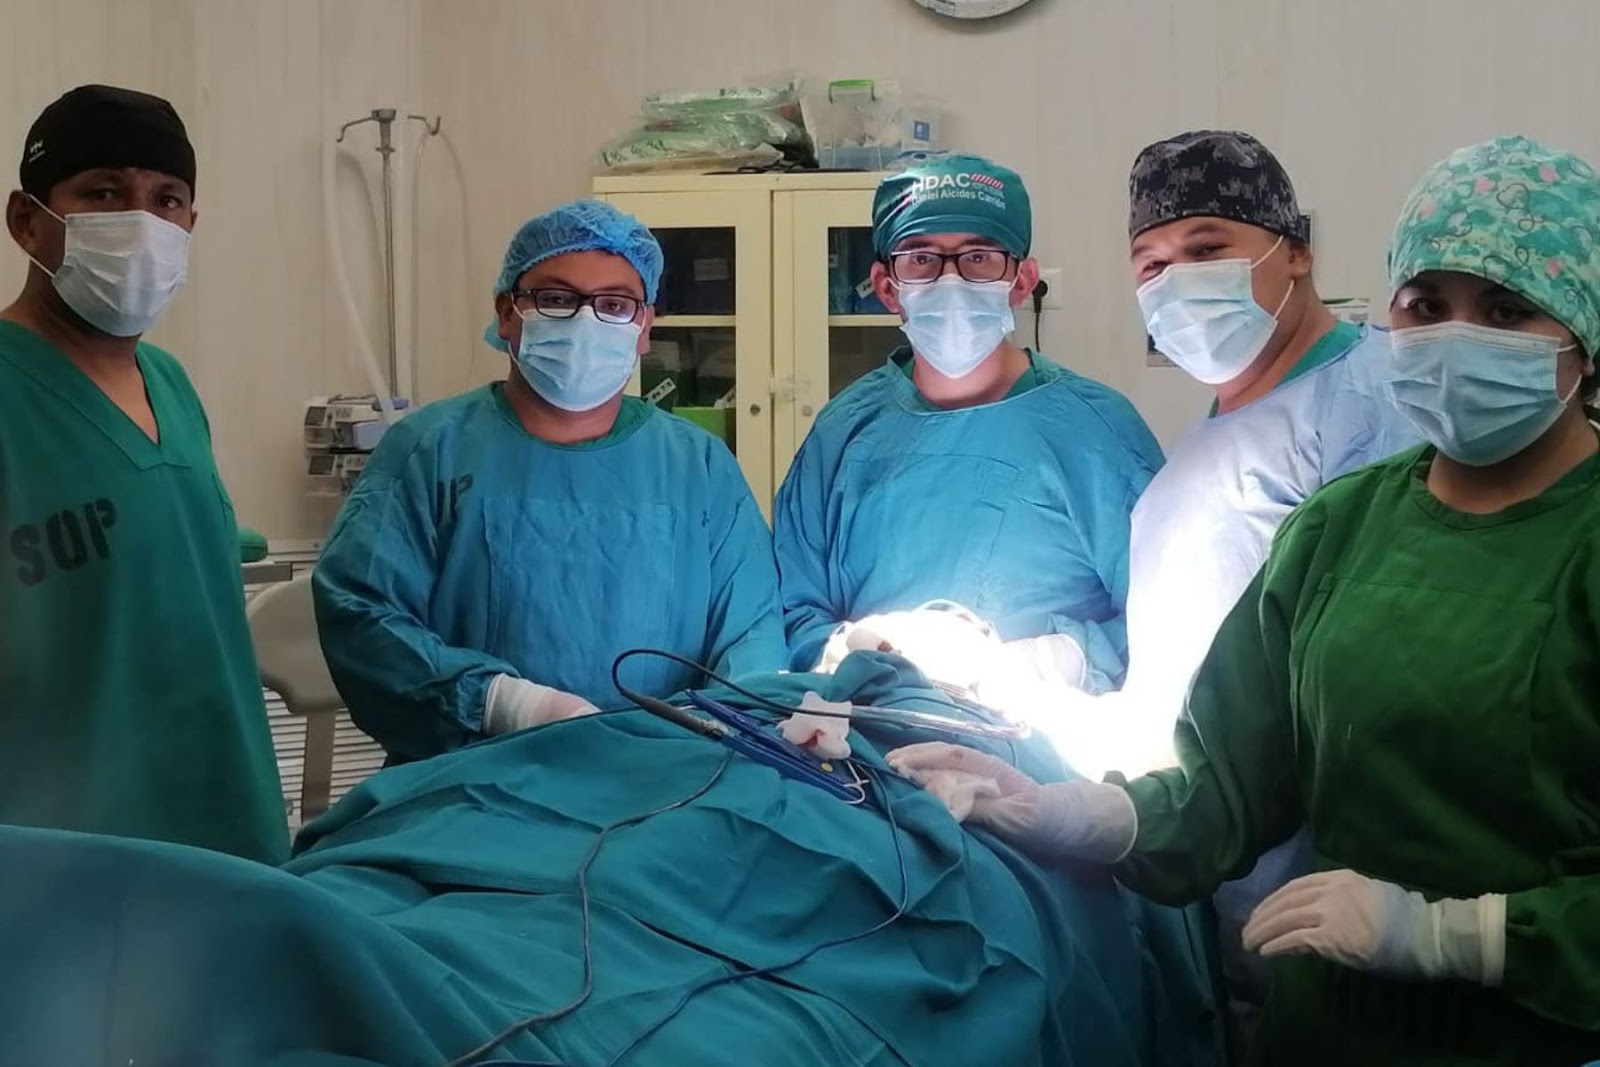 Intervención quirúrgica se practicó en el Hospital Regional Daniel Alcides Carrión de Pasco. Foto: ANDINA/Minsa